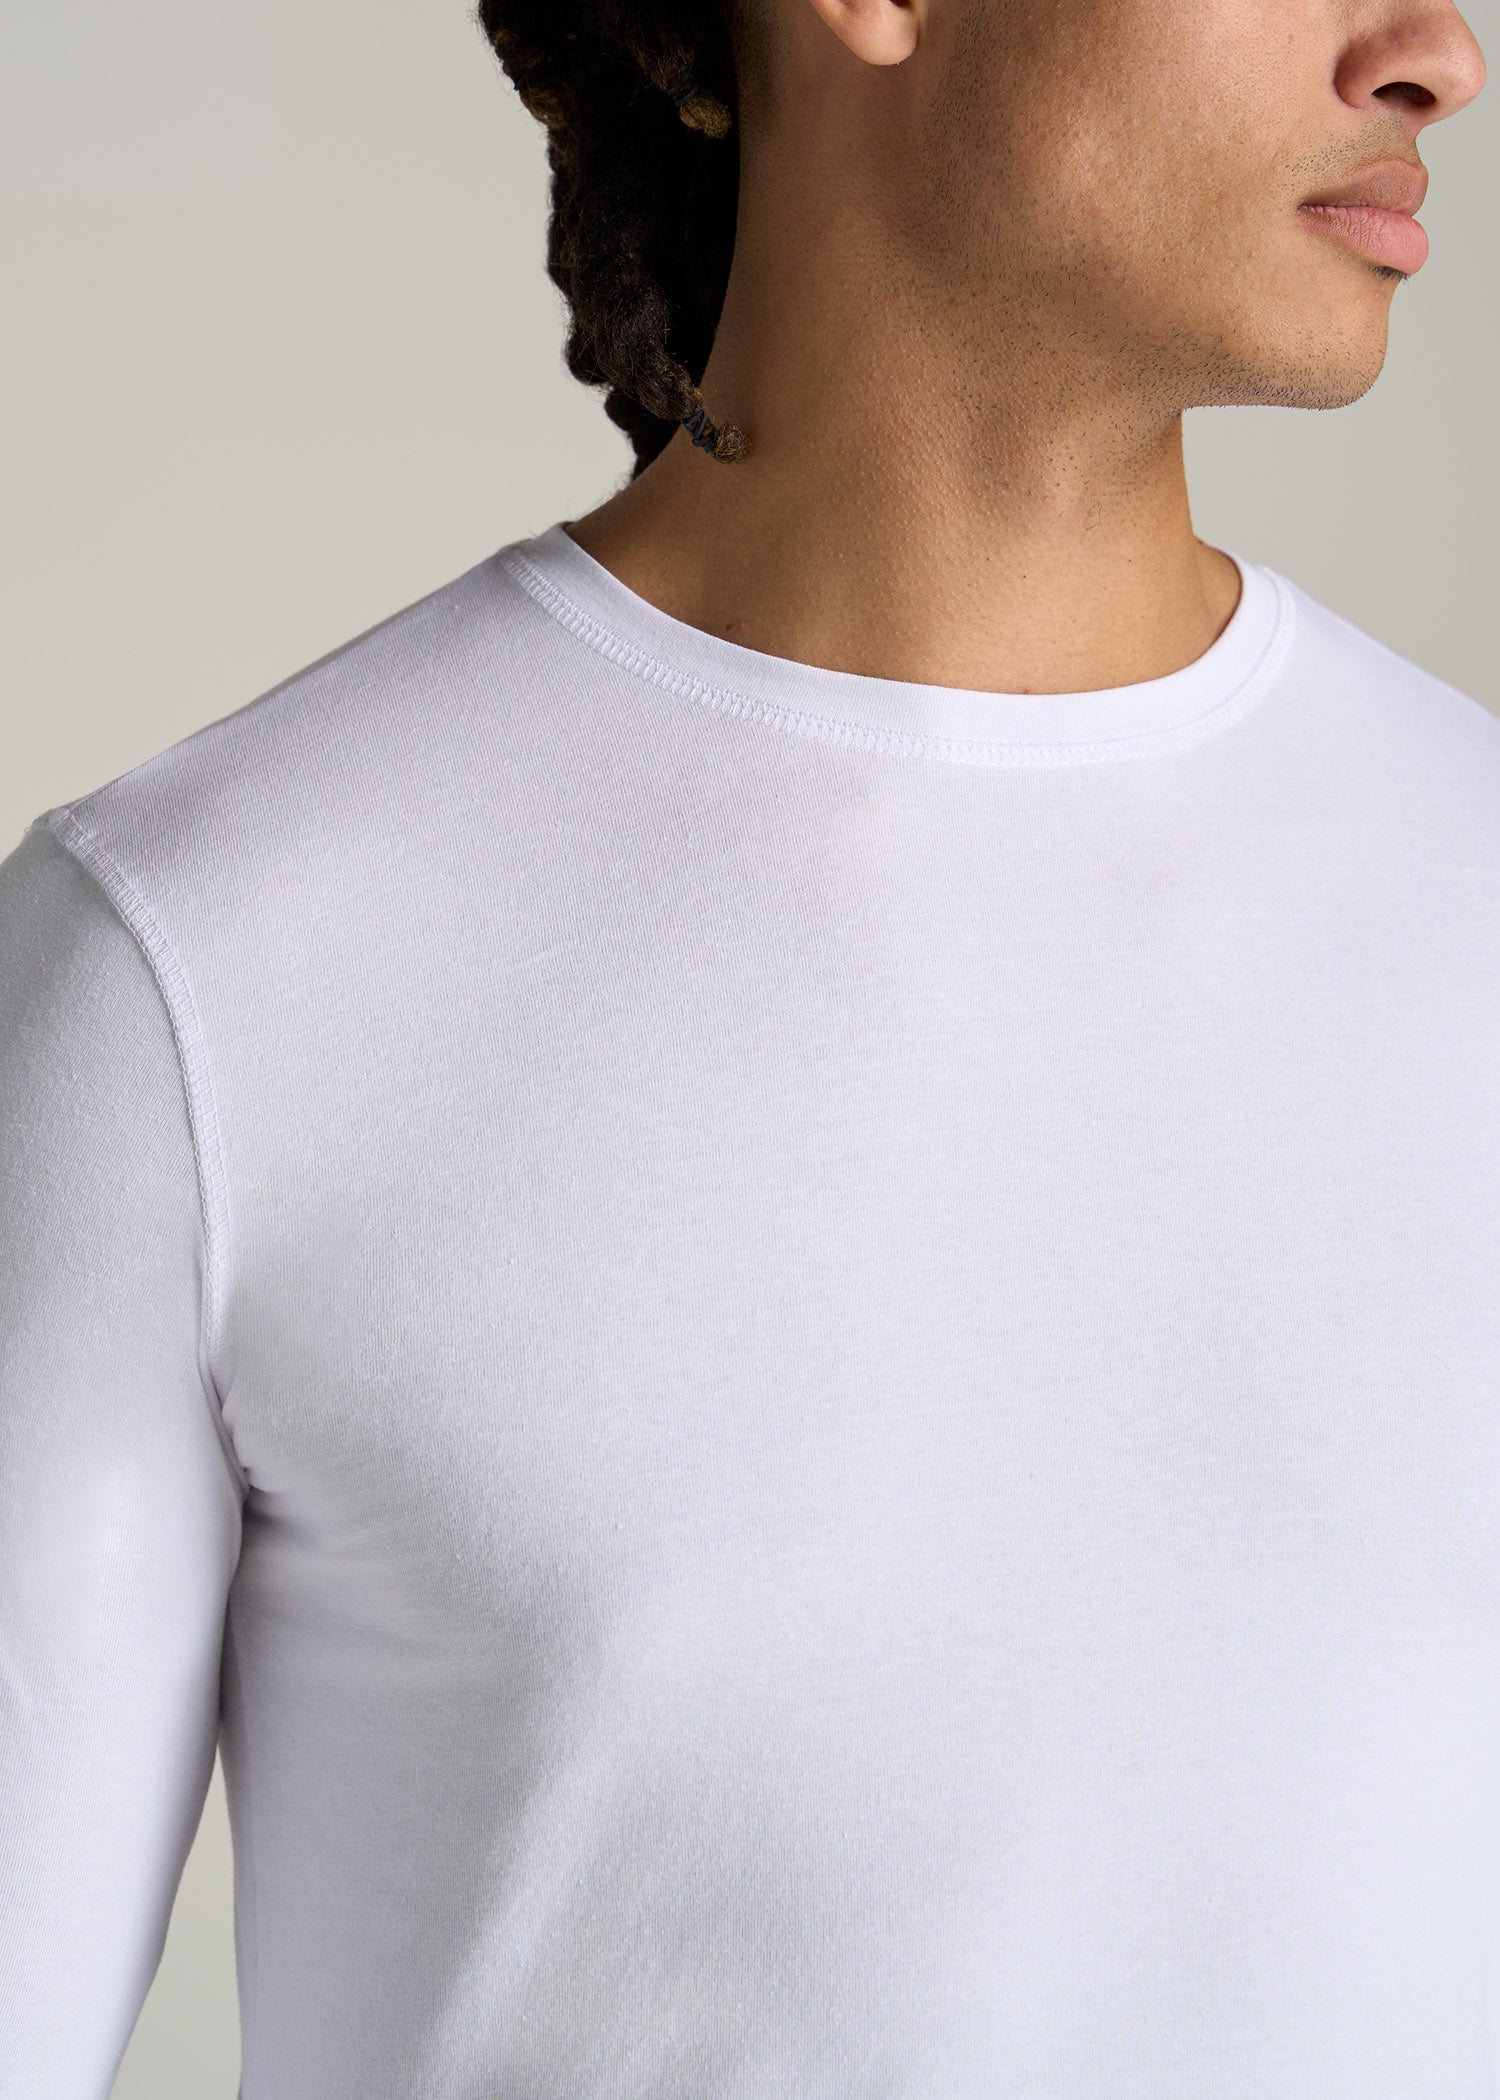 venom Matematisk Hofte Slim Long Sleeve T Shirt: Tall Men's Slim Fit White Tee – American Tall